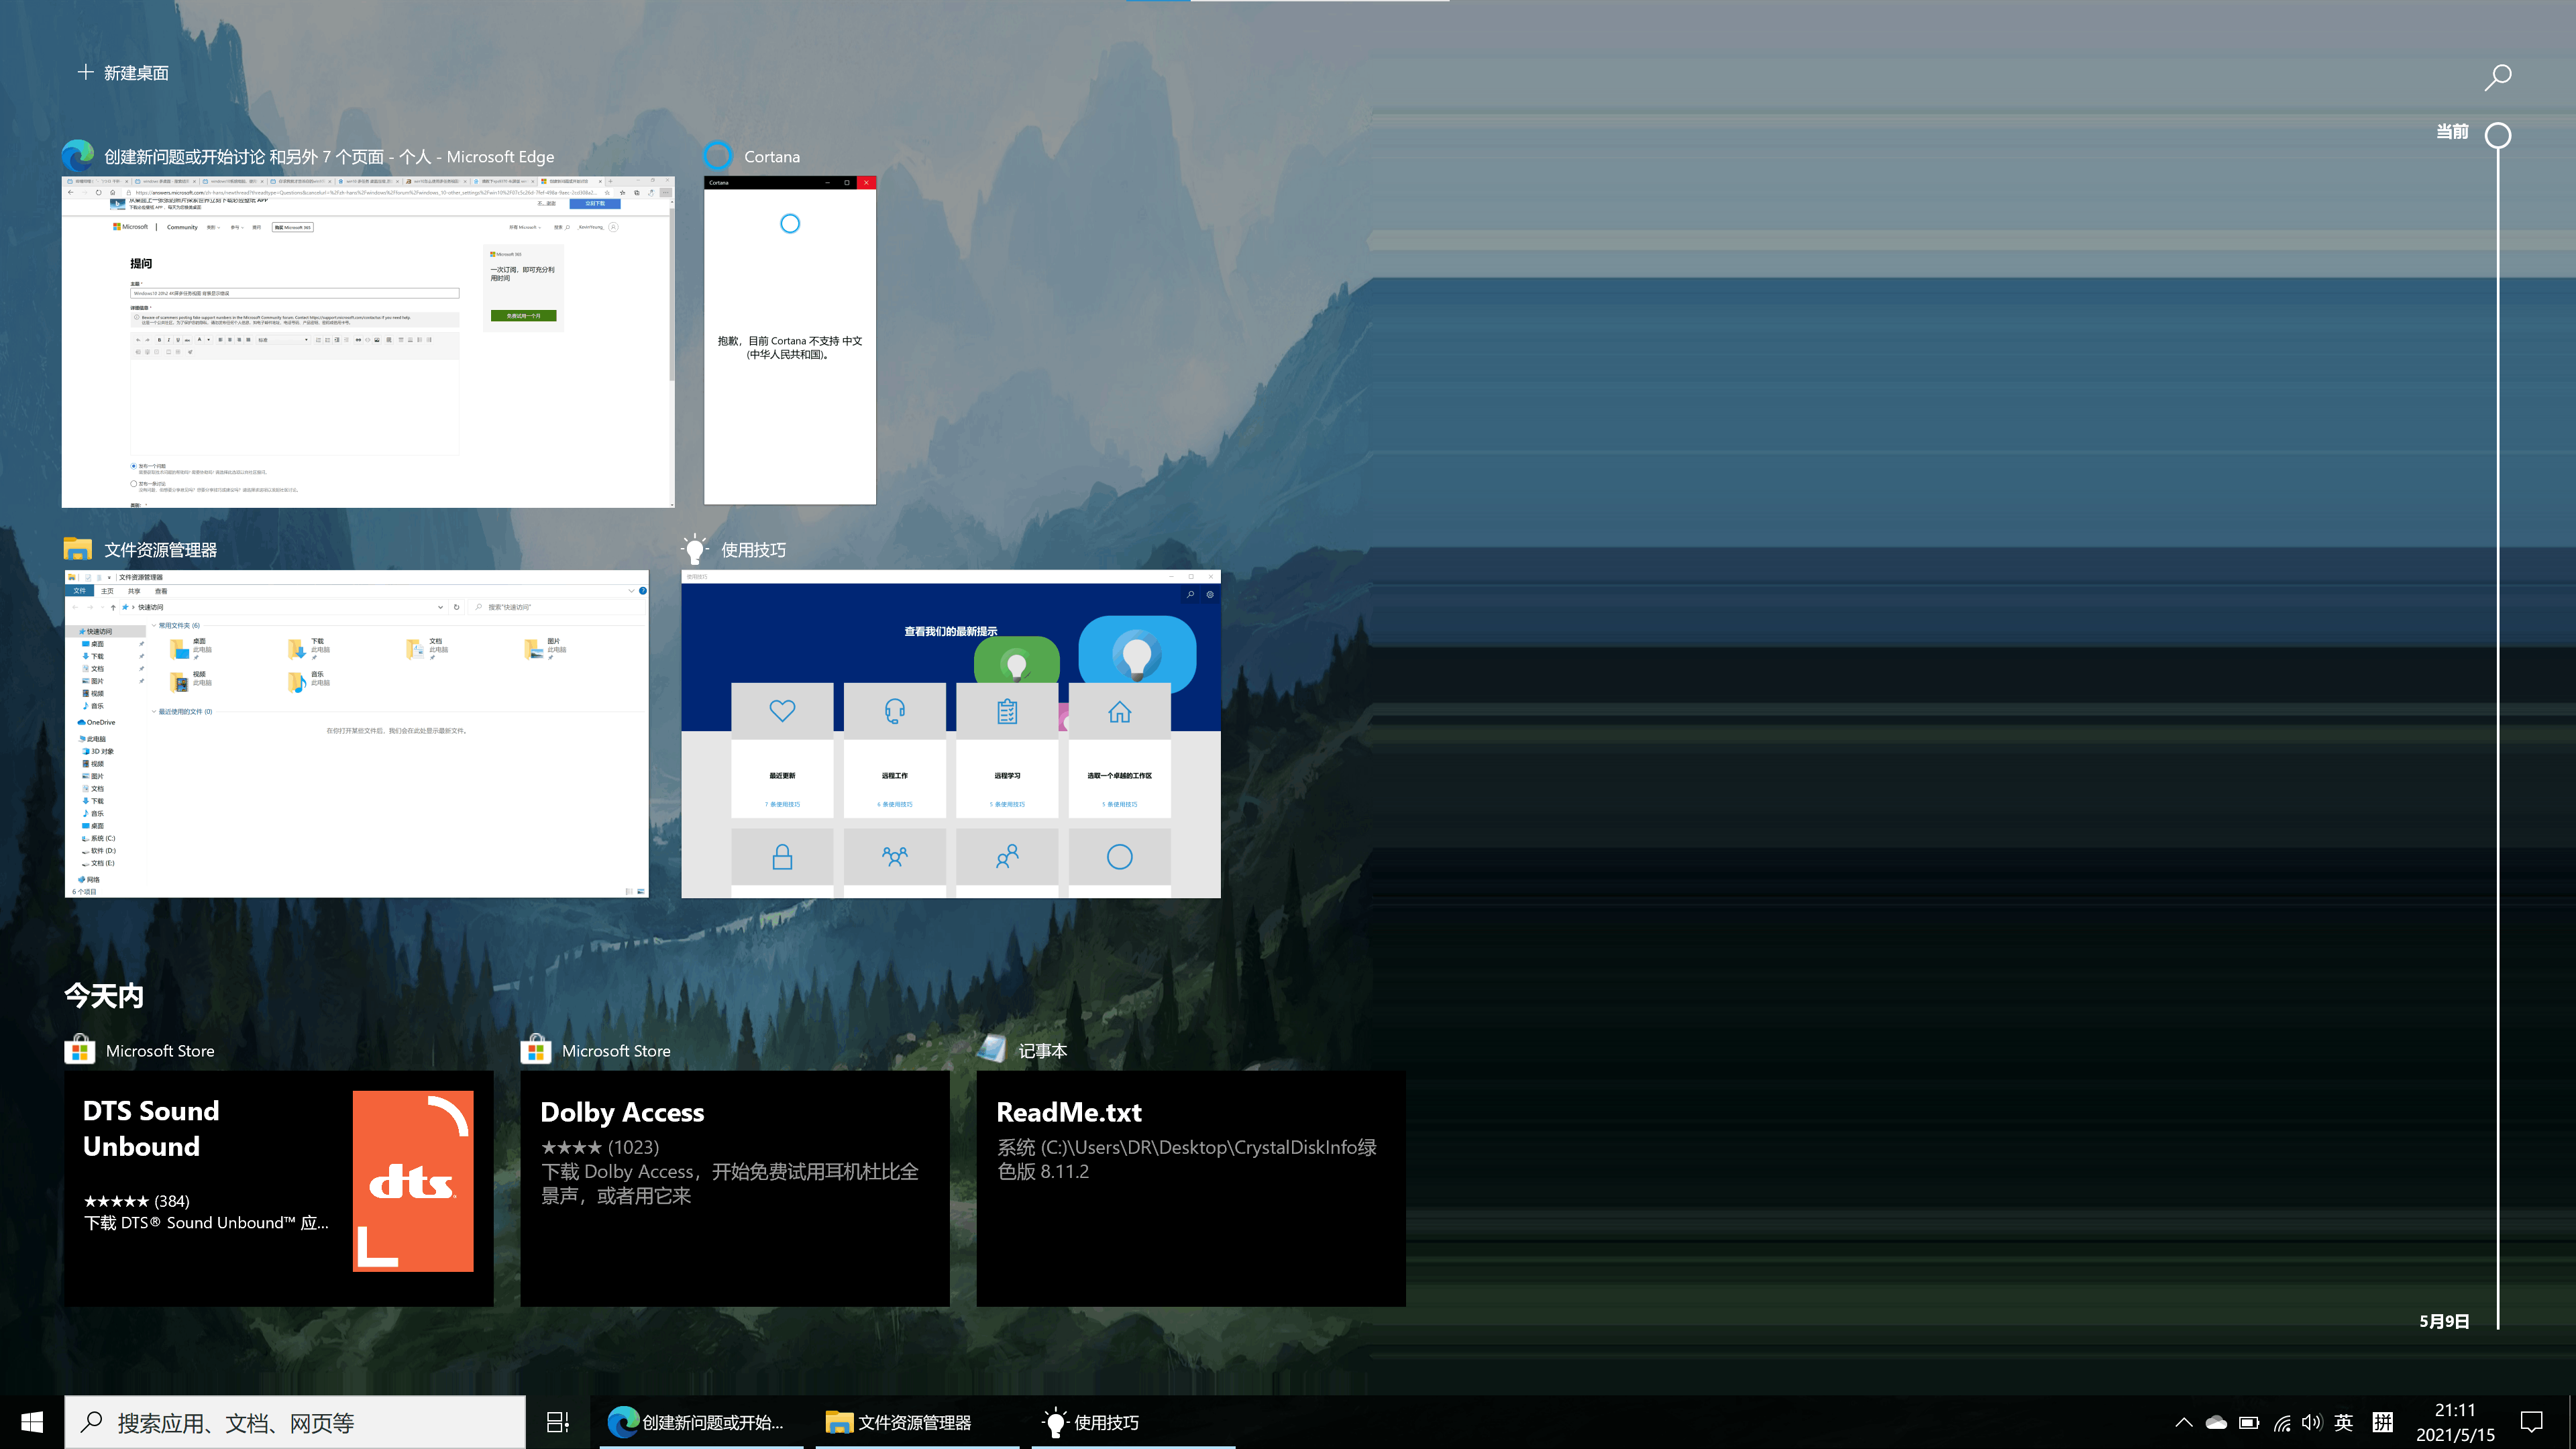 Windows10 h2 4k屏多任务视图背景显示错误 Microsoft Community